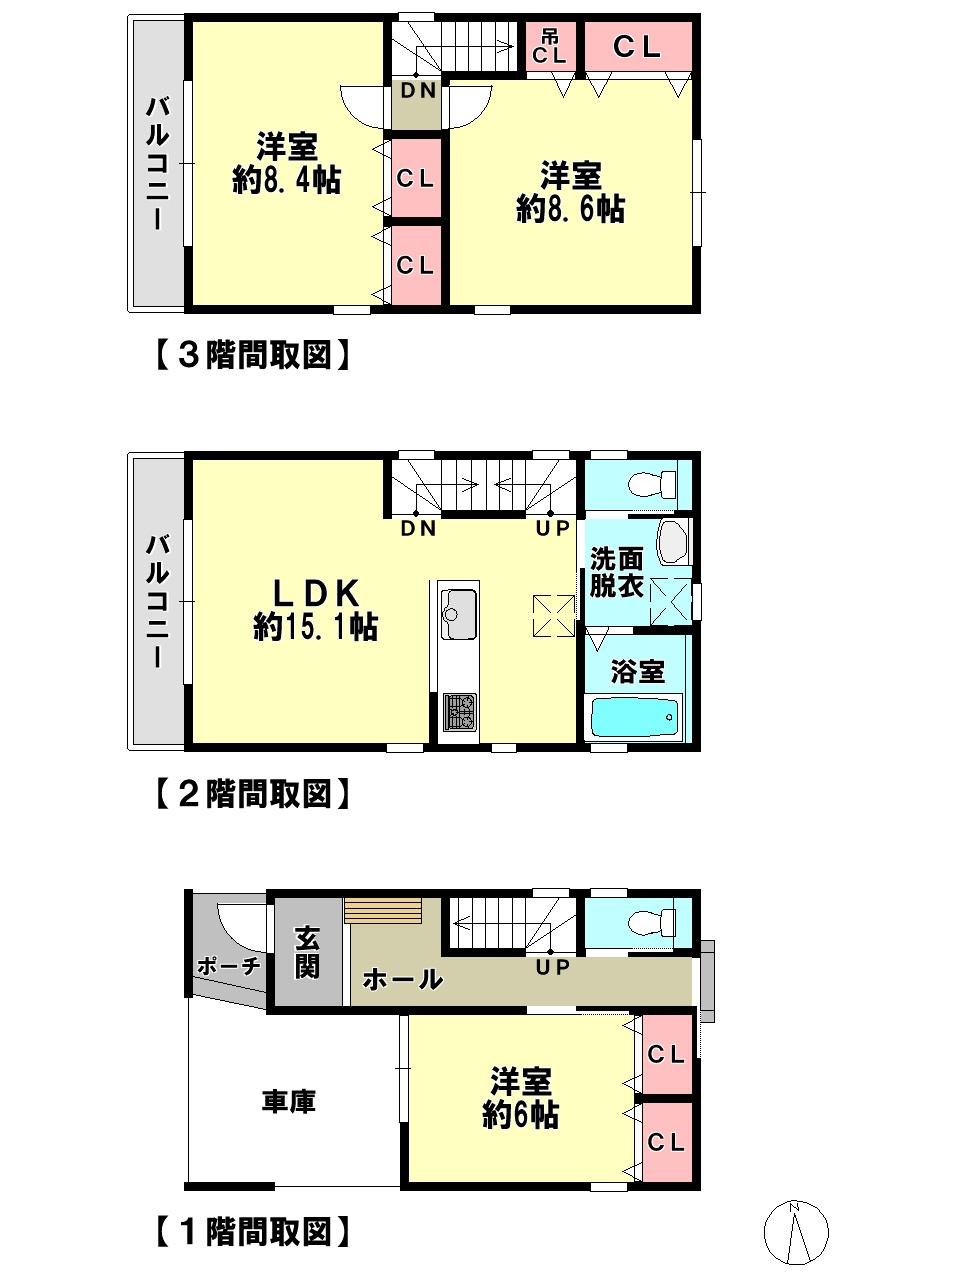 Building plan example (floor plan). Building plan example Building price 18 million yen, Building area 110.75 sq m